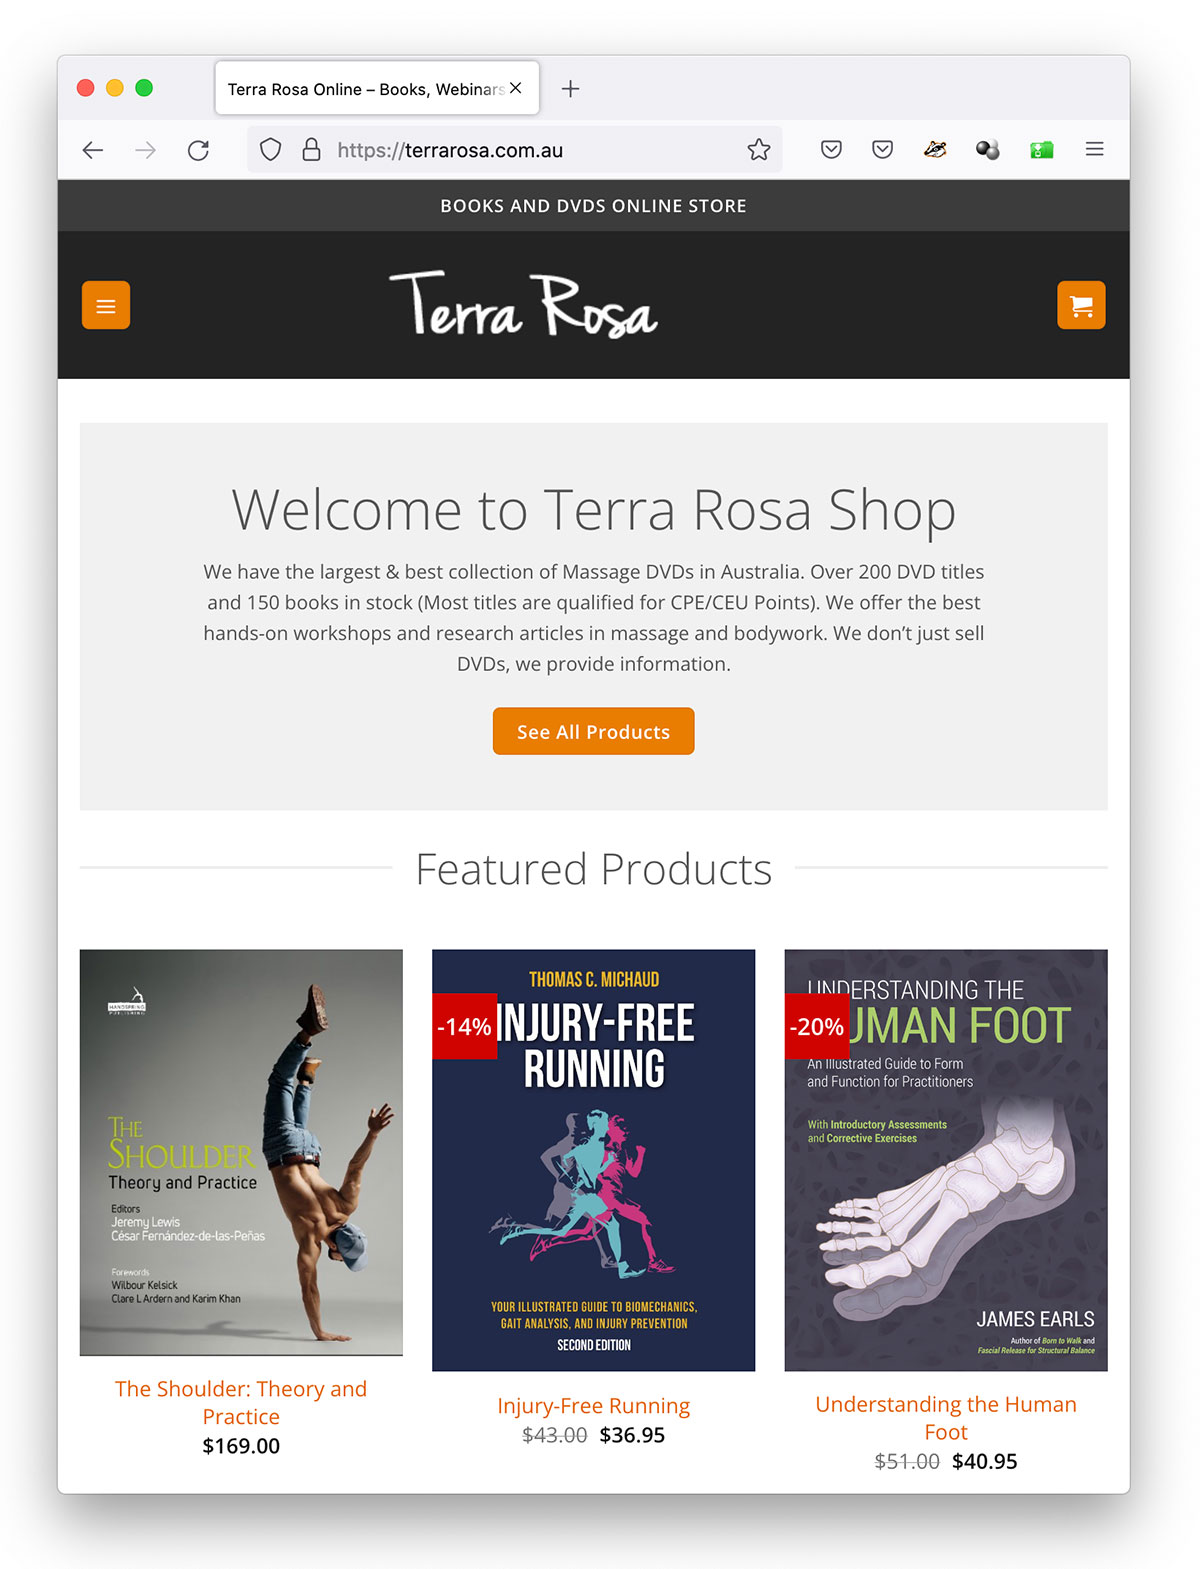 Terra Rosa Book Store